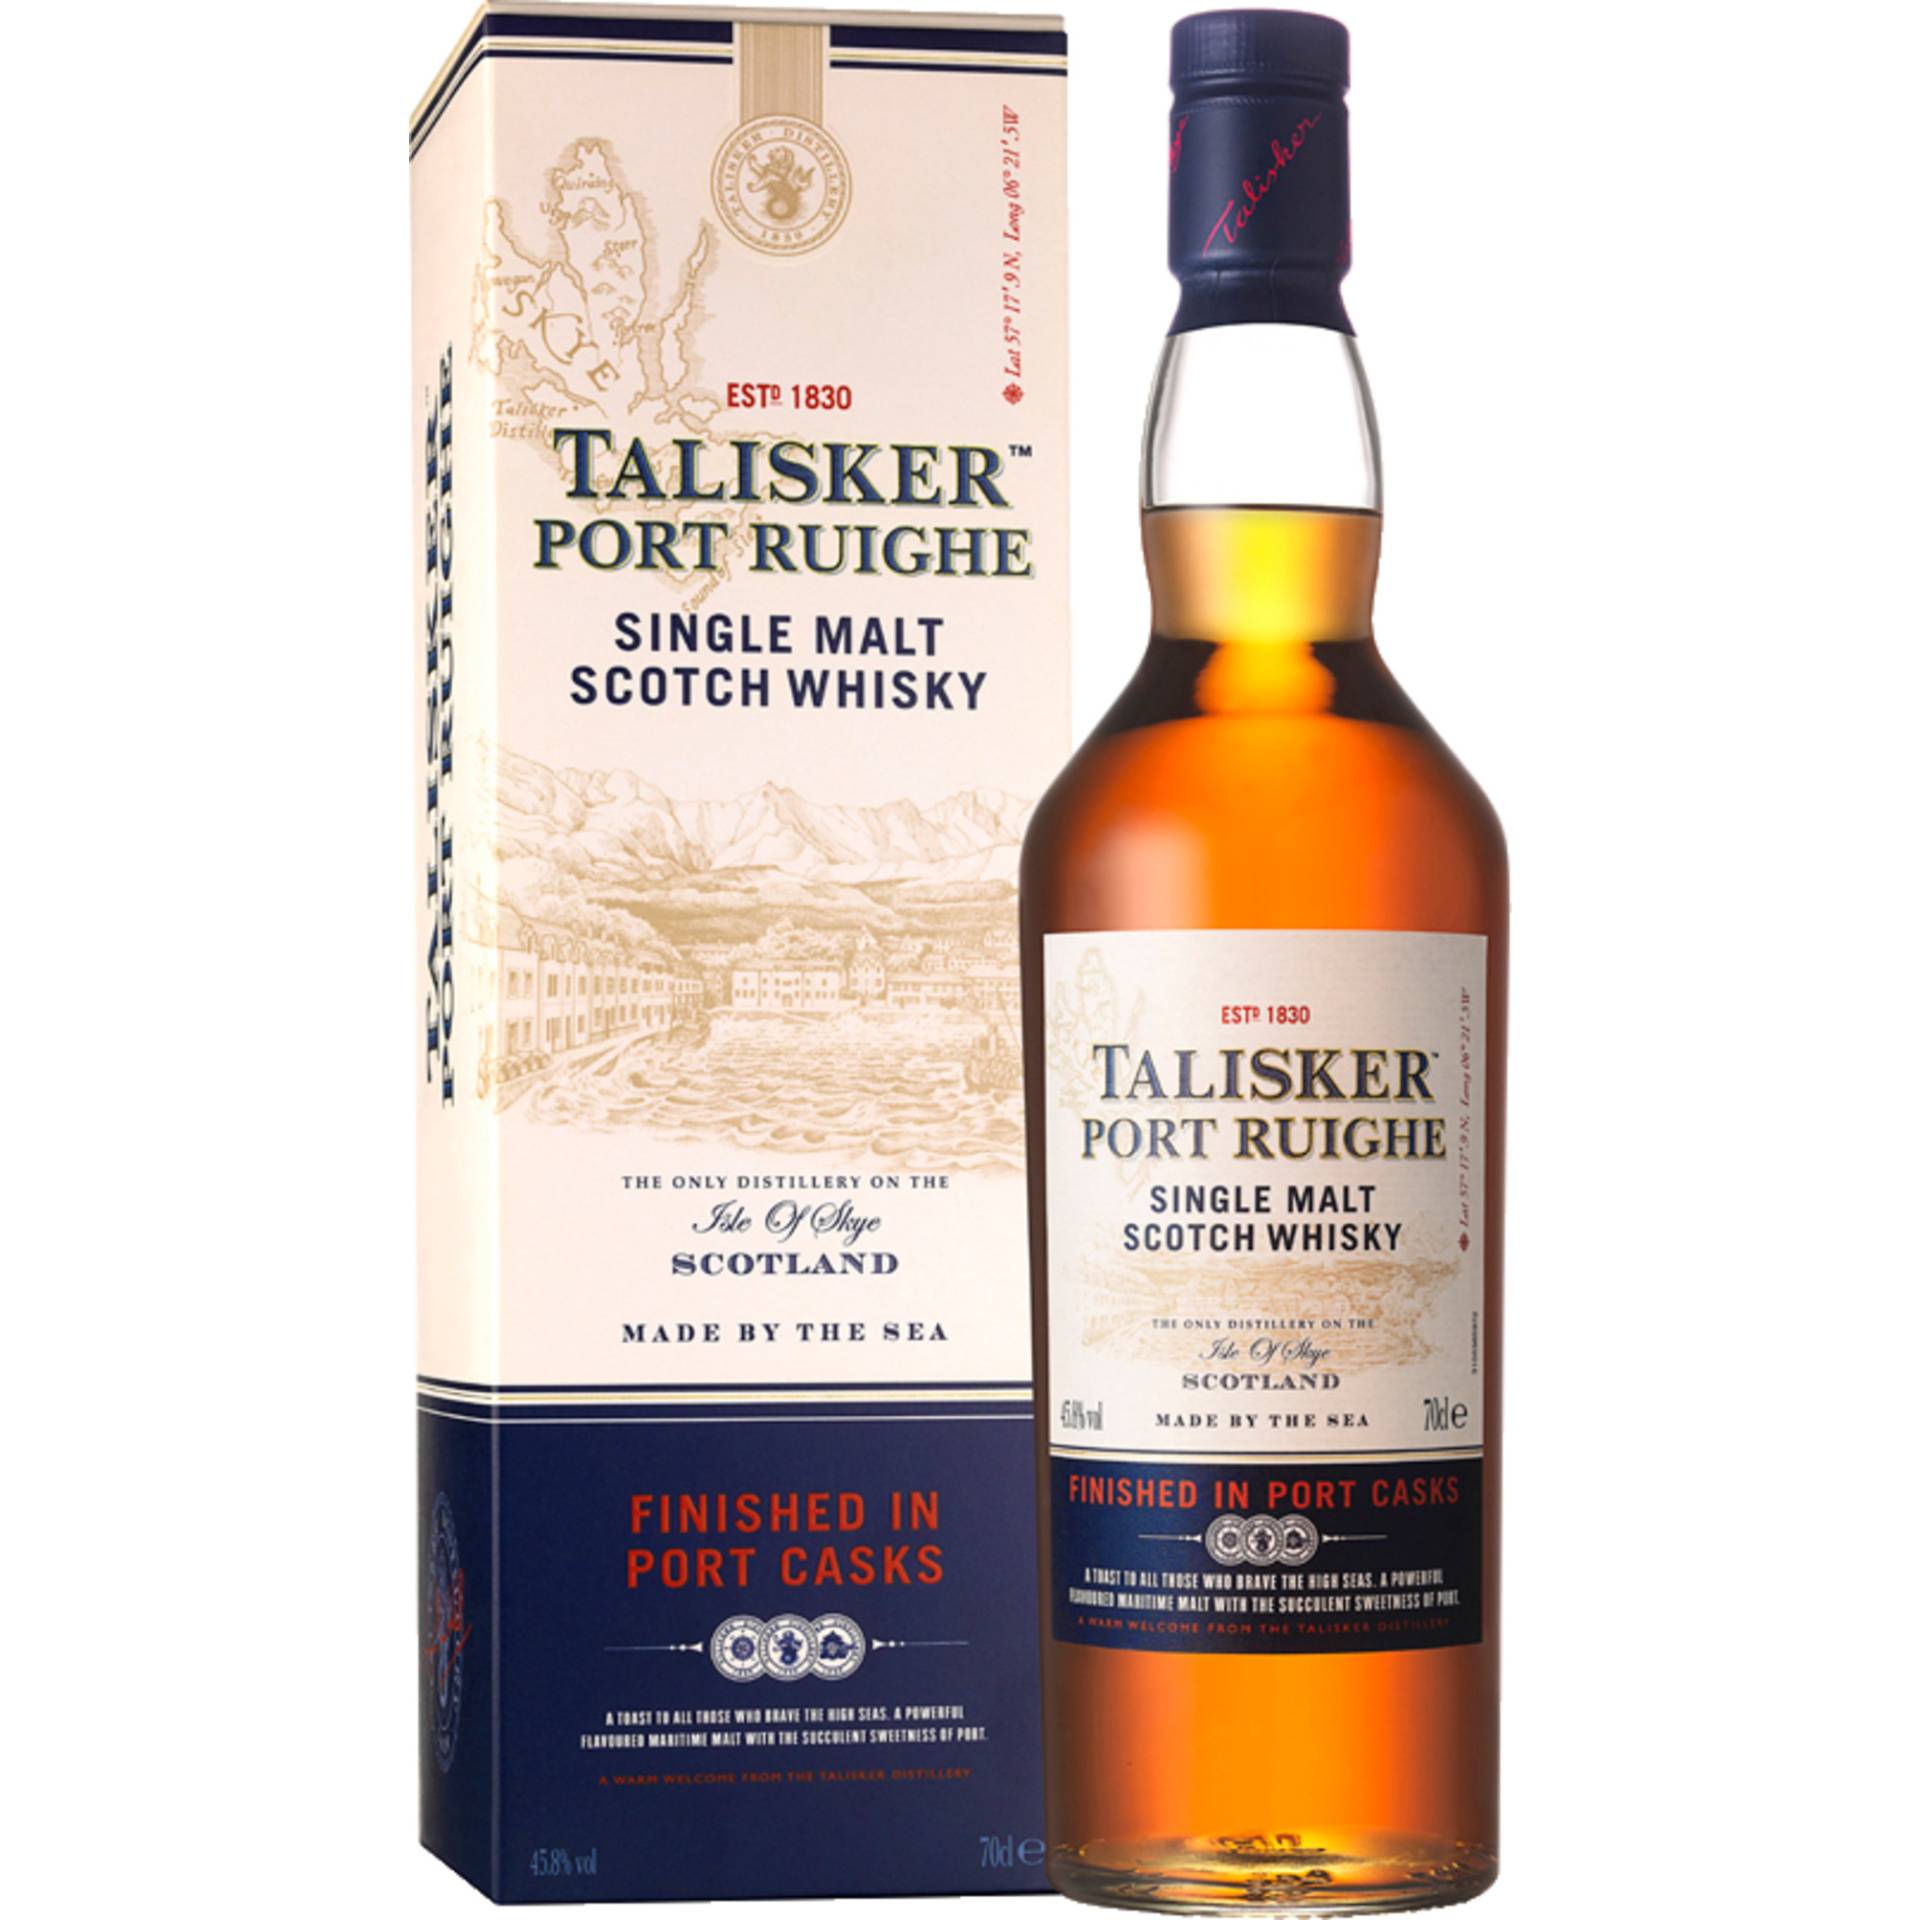 Talisker Port Ruighe Isle of Skye Single Malt, Scotch Whisky, 0,7 L, 45,8% Vol., Schottland, Spirituosen von Talisker Distillery, Carbost, Isle of Skye, IV47 8 SR, Scotland